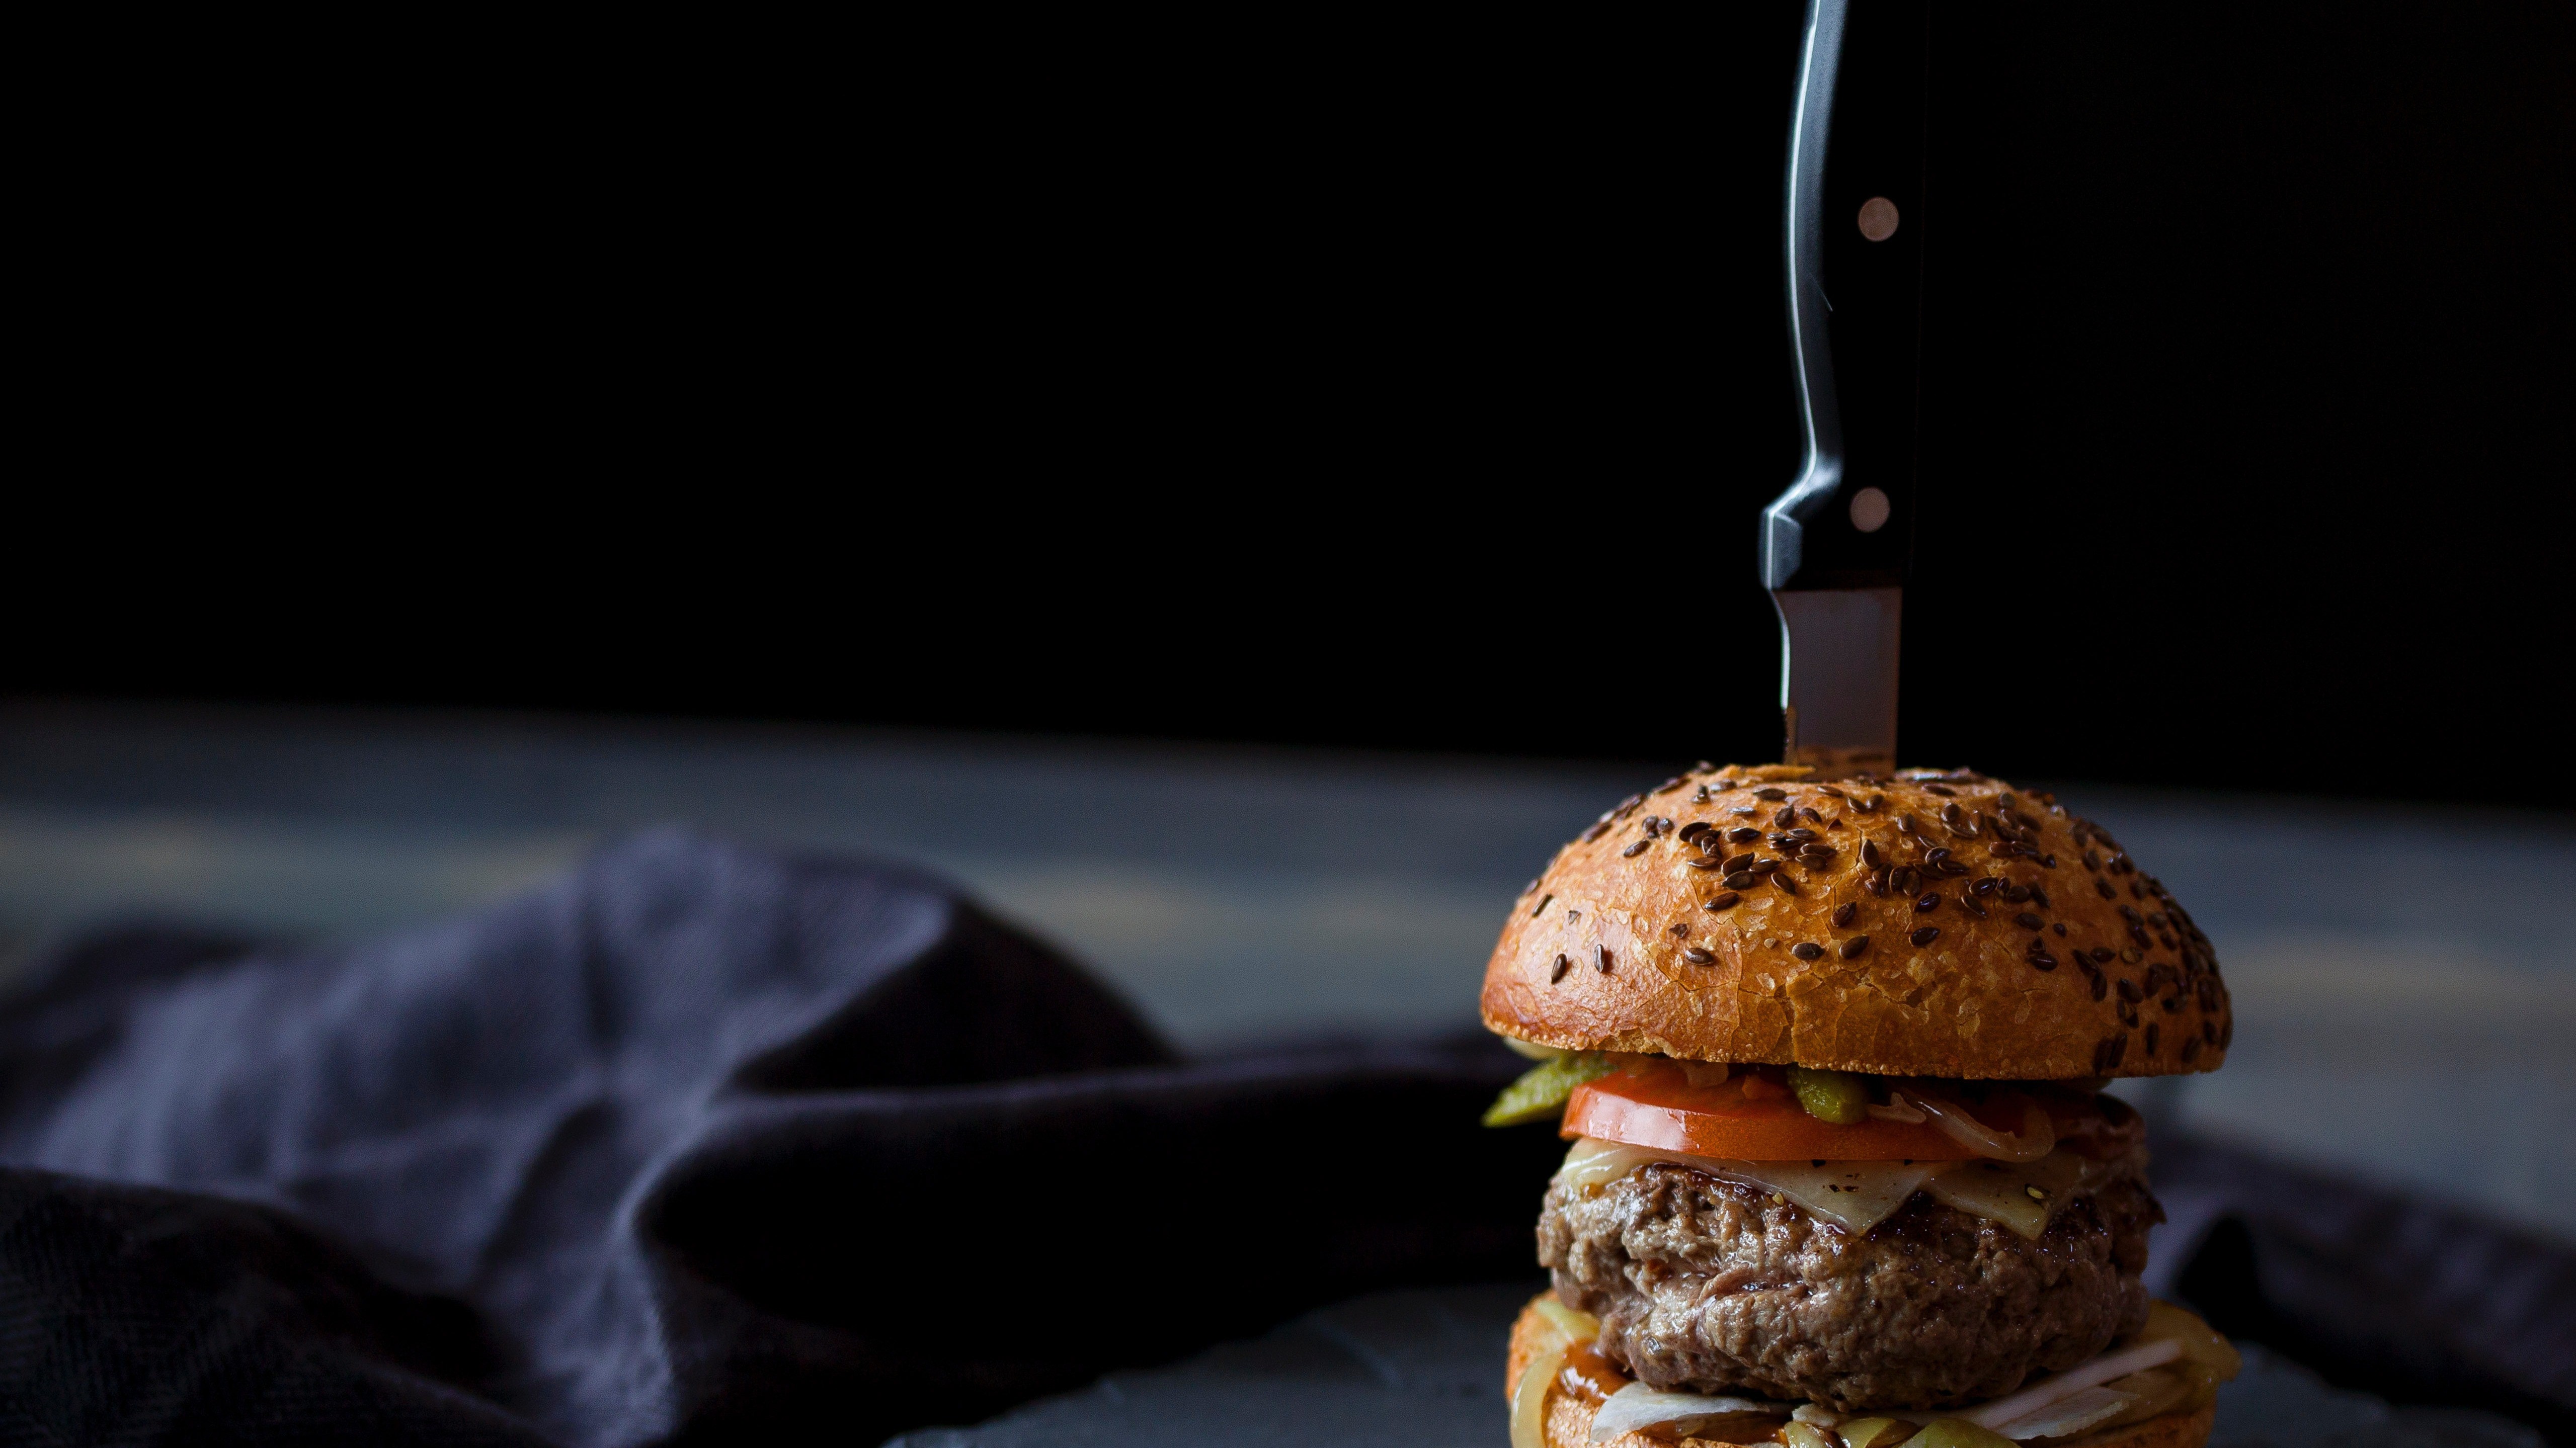 Non Veg Burger And Knife 5k Image Background - Blue Boar Westminster Restaurant London - HD Wallpaper 